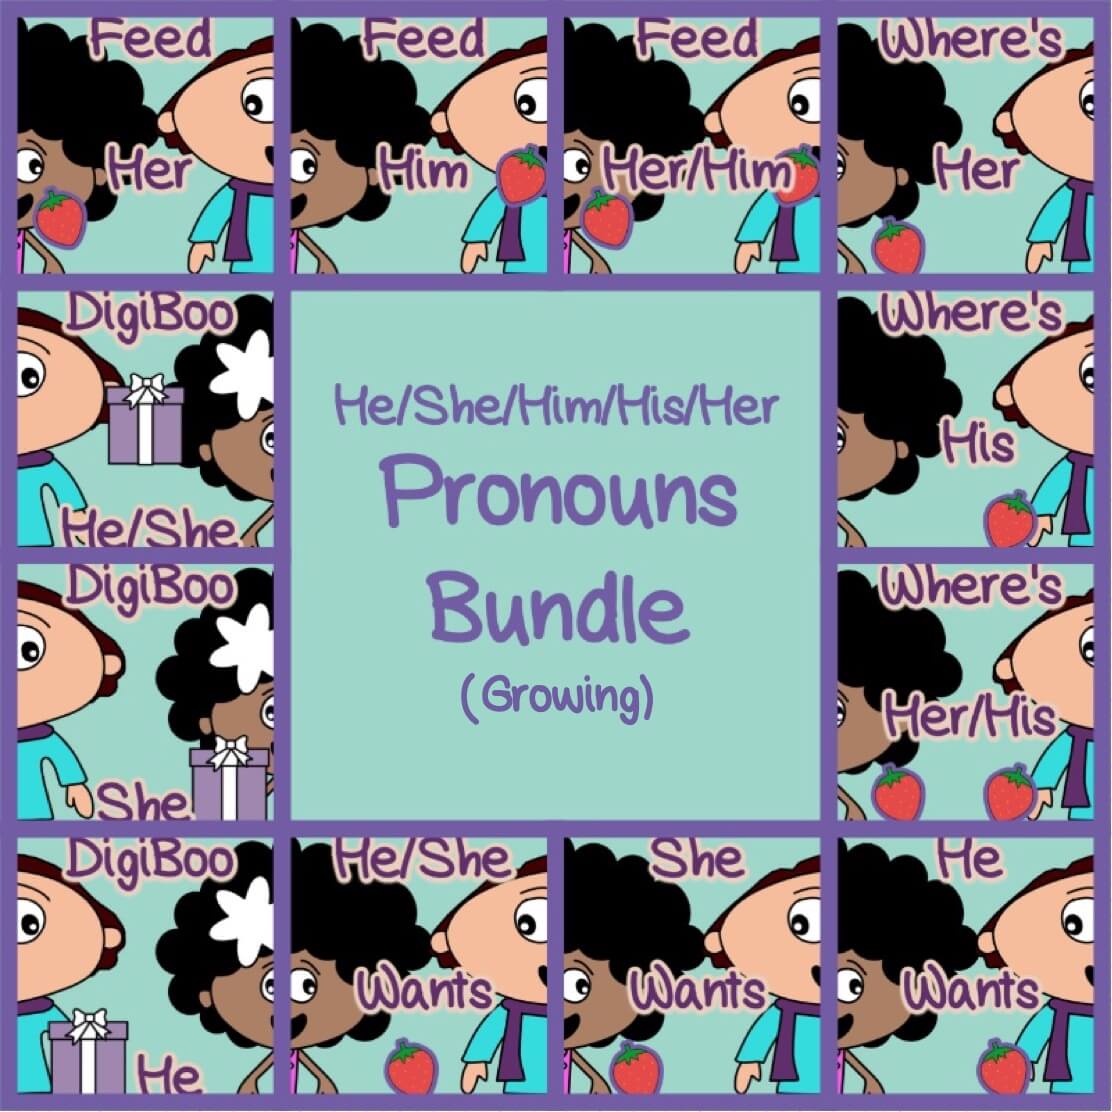 The Pronouns Bundle